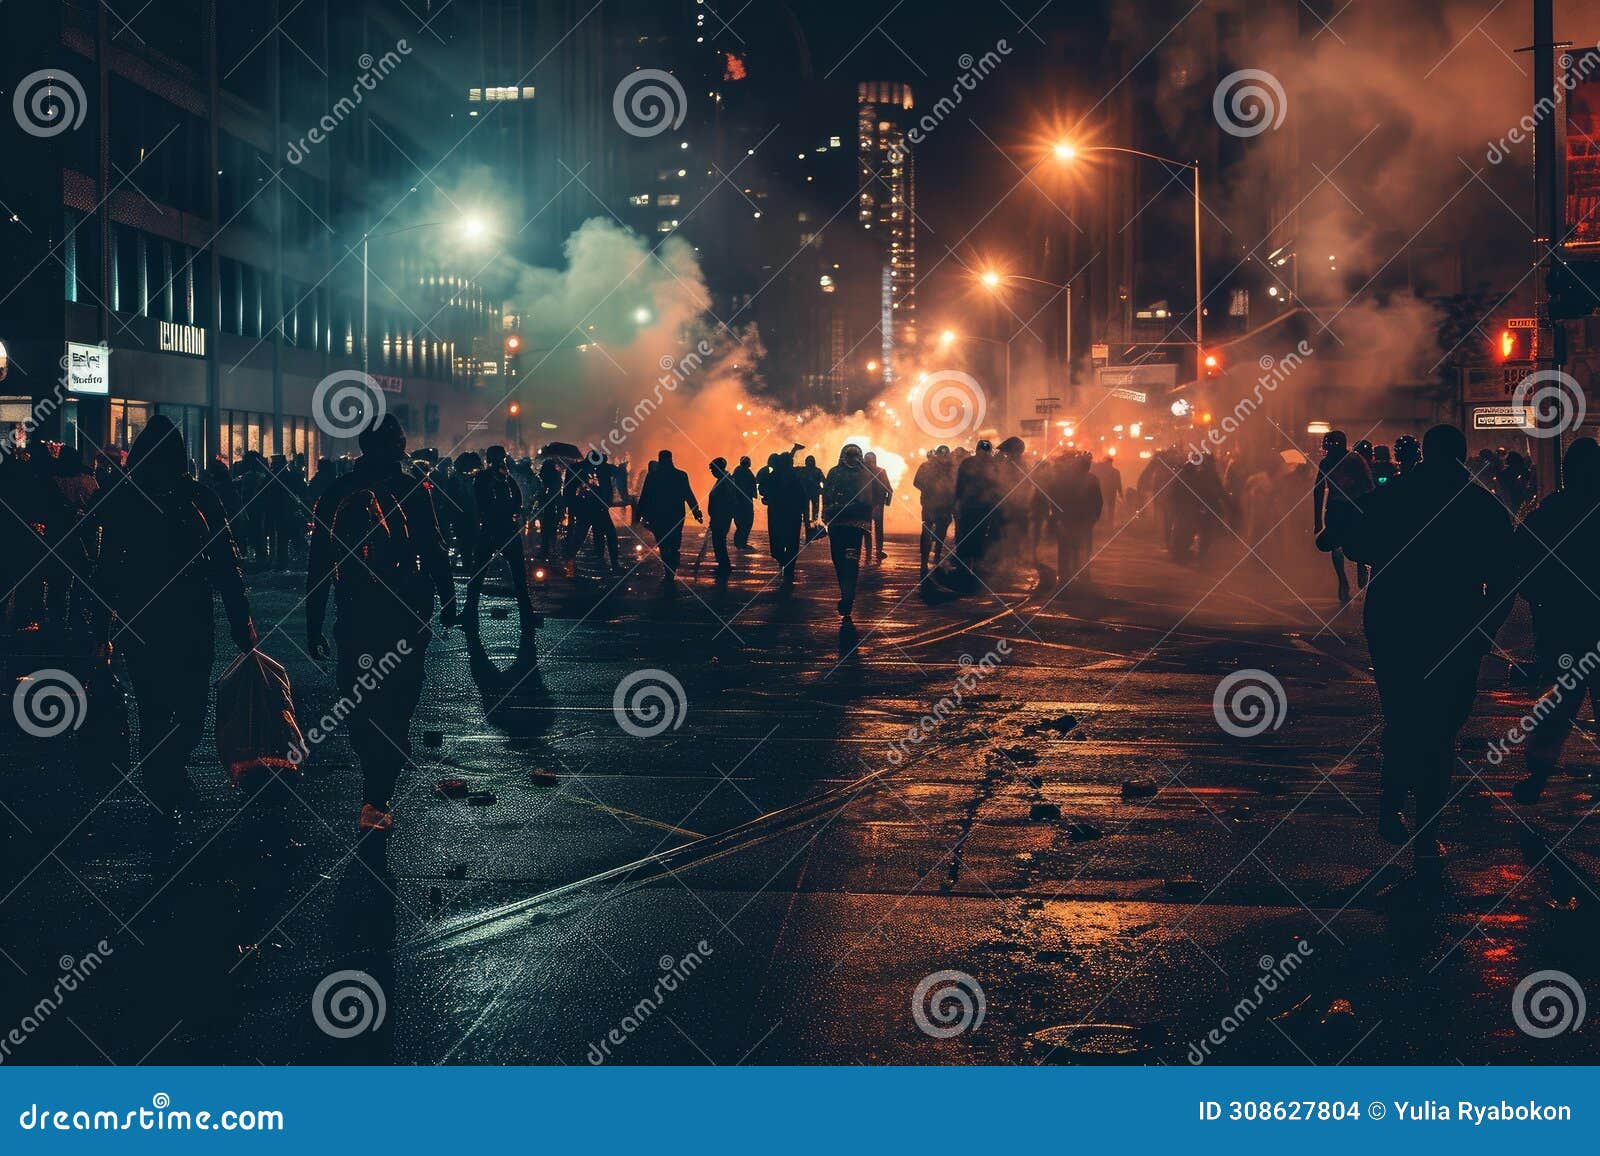 riot civil unrest protest. generate ai